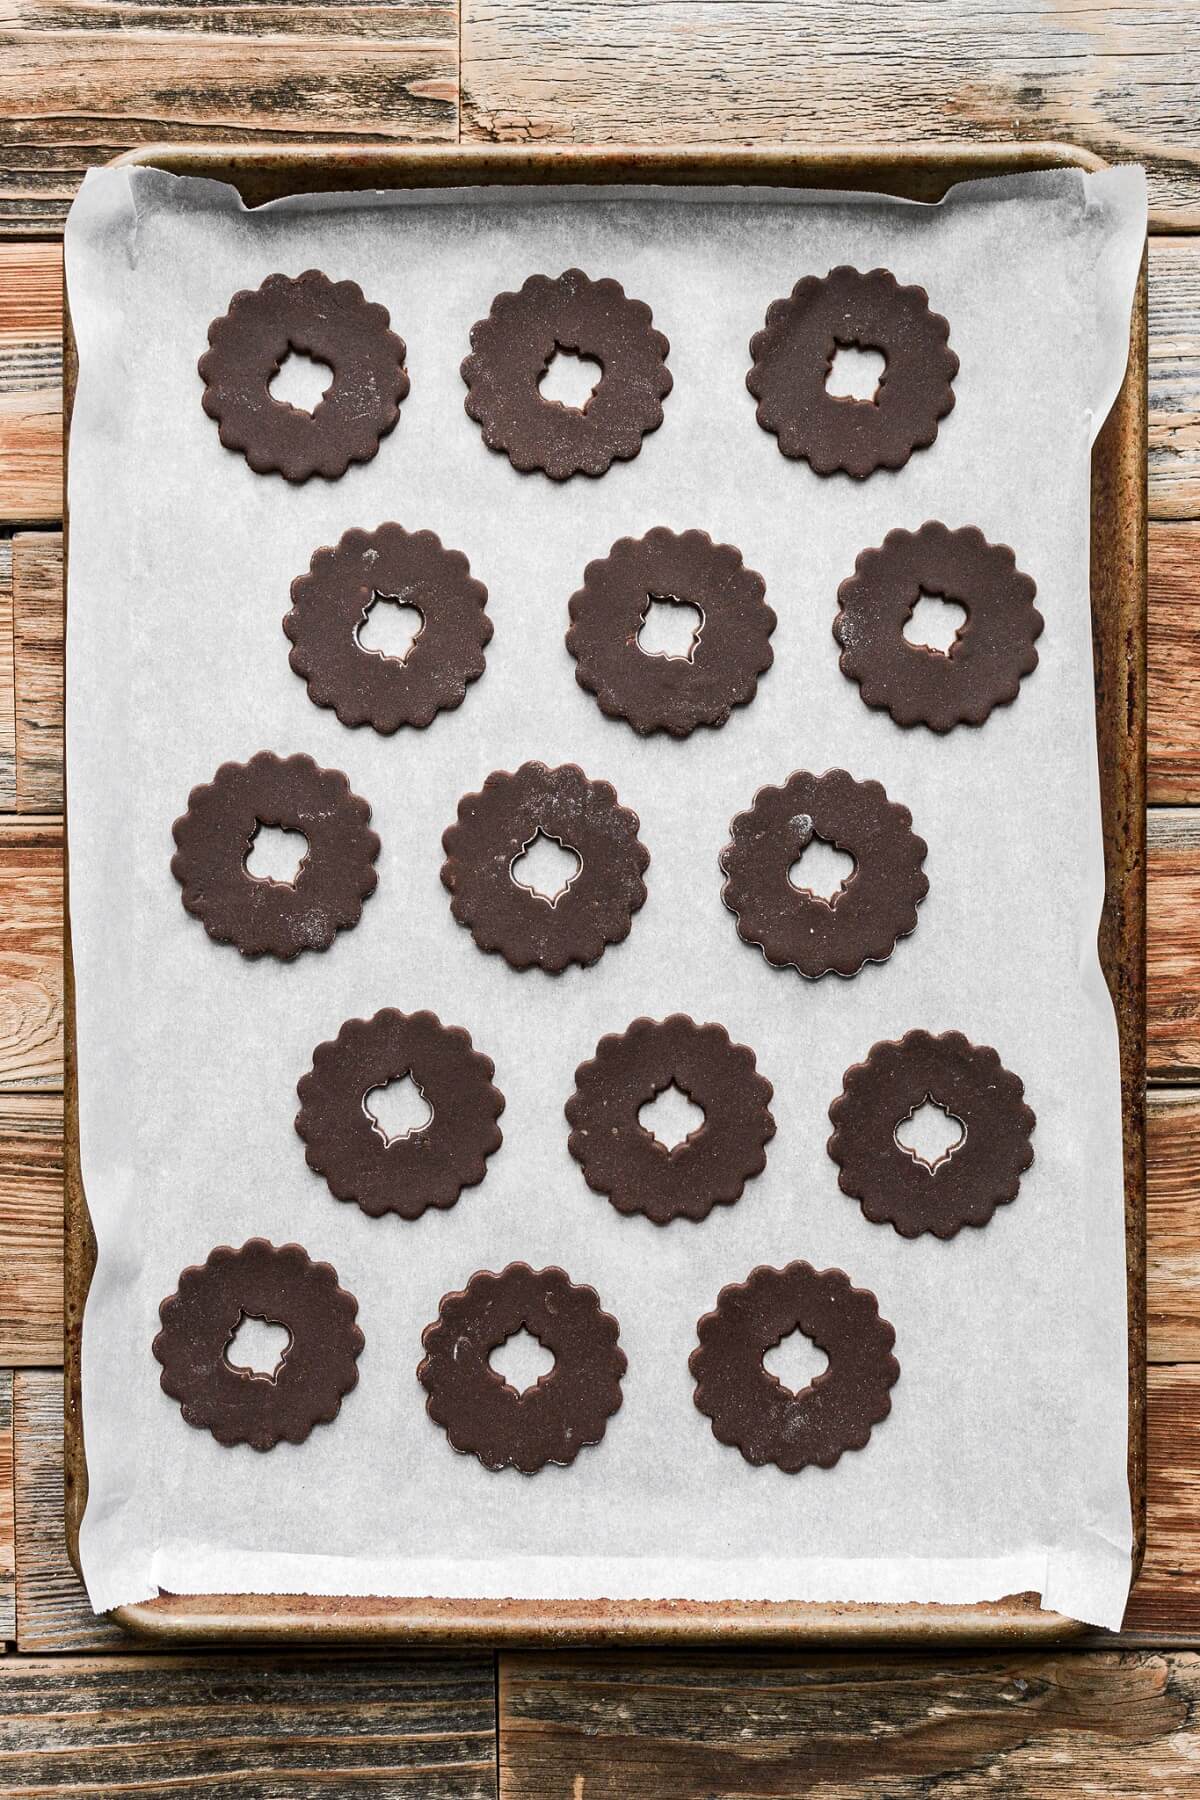 Cutout chocolate sugar cookies on a baking sheet.